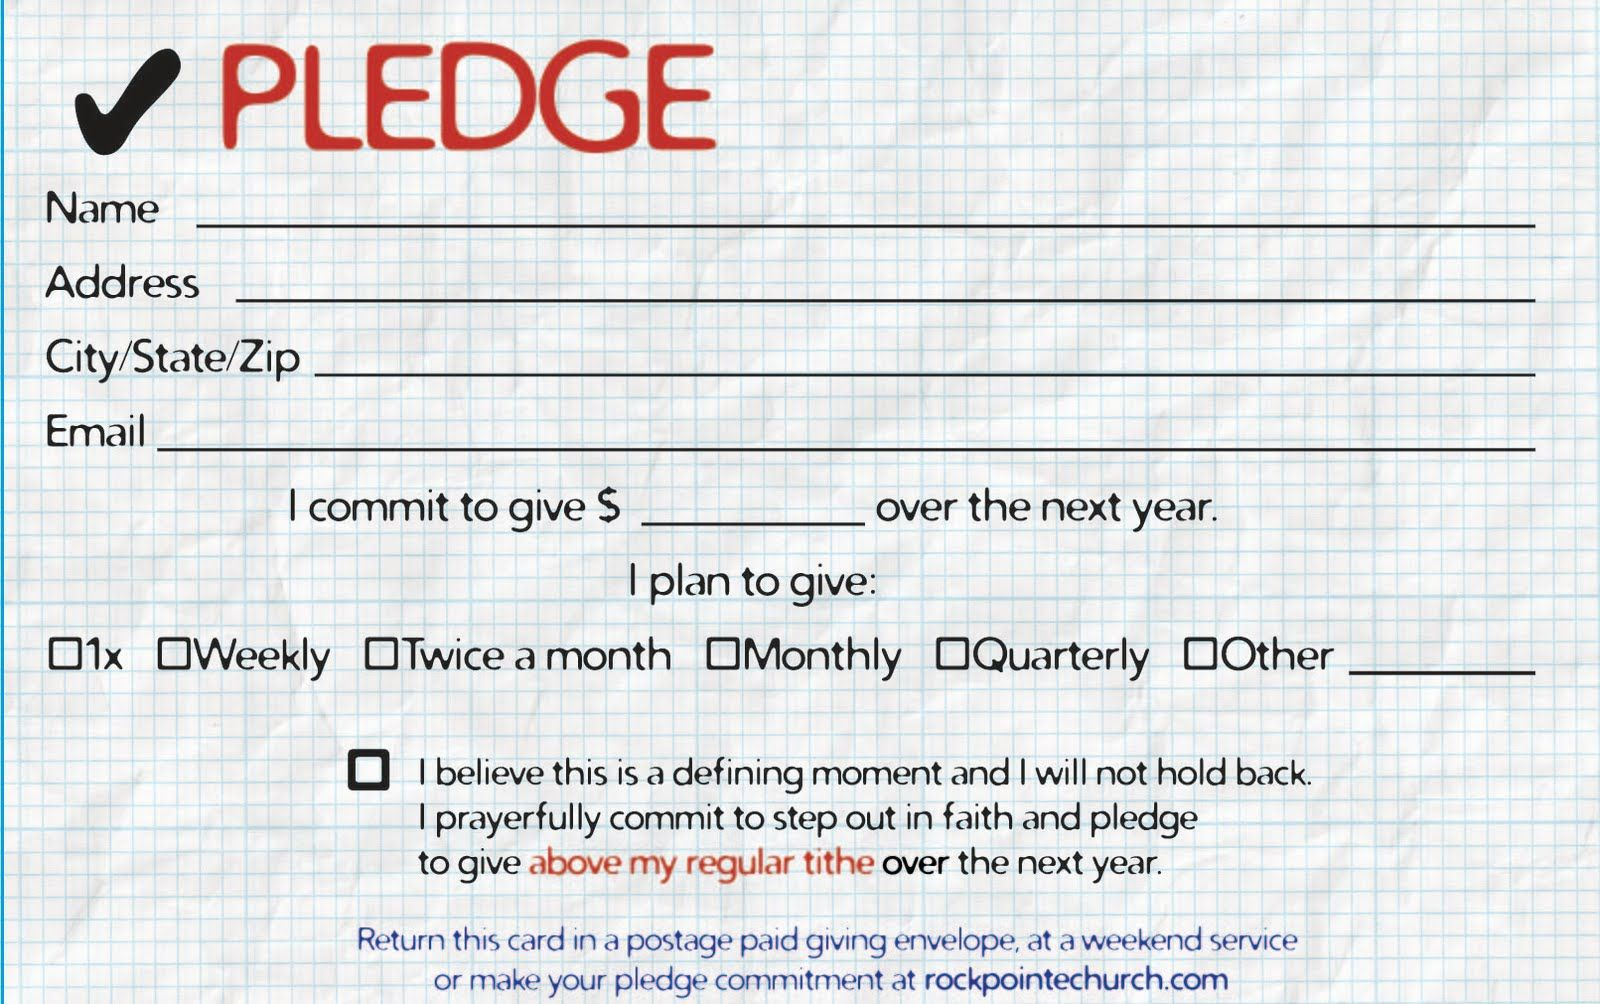 Pledge Cards For Churches | Pledge Card Templates | My Stuff Throughout Church Pledge Card Template